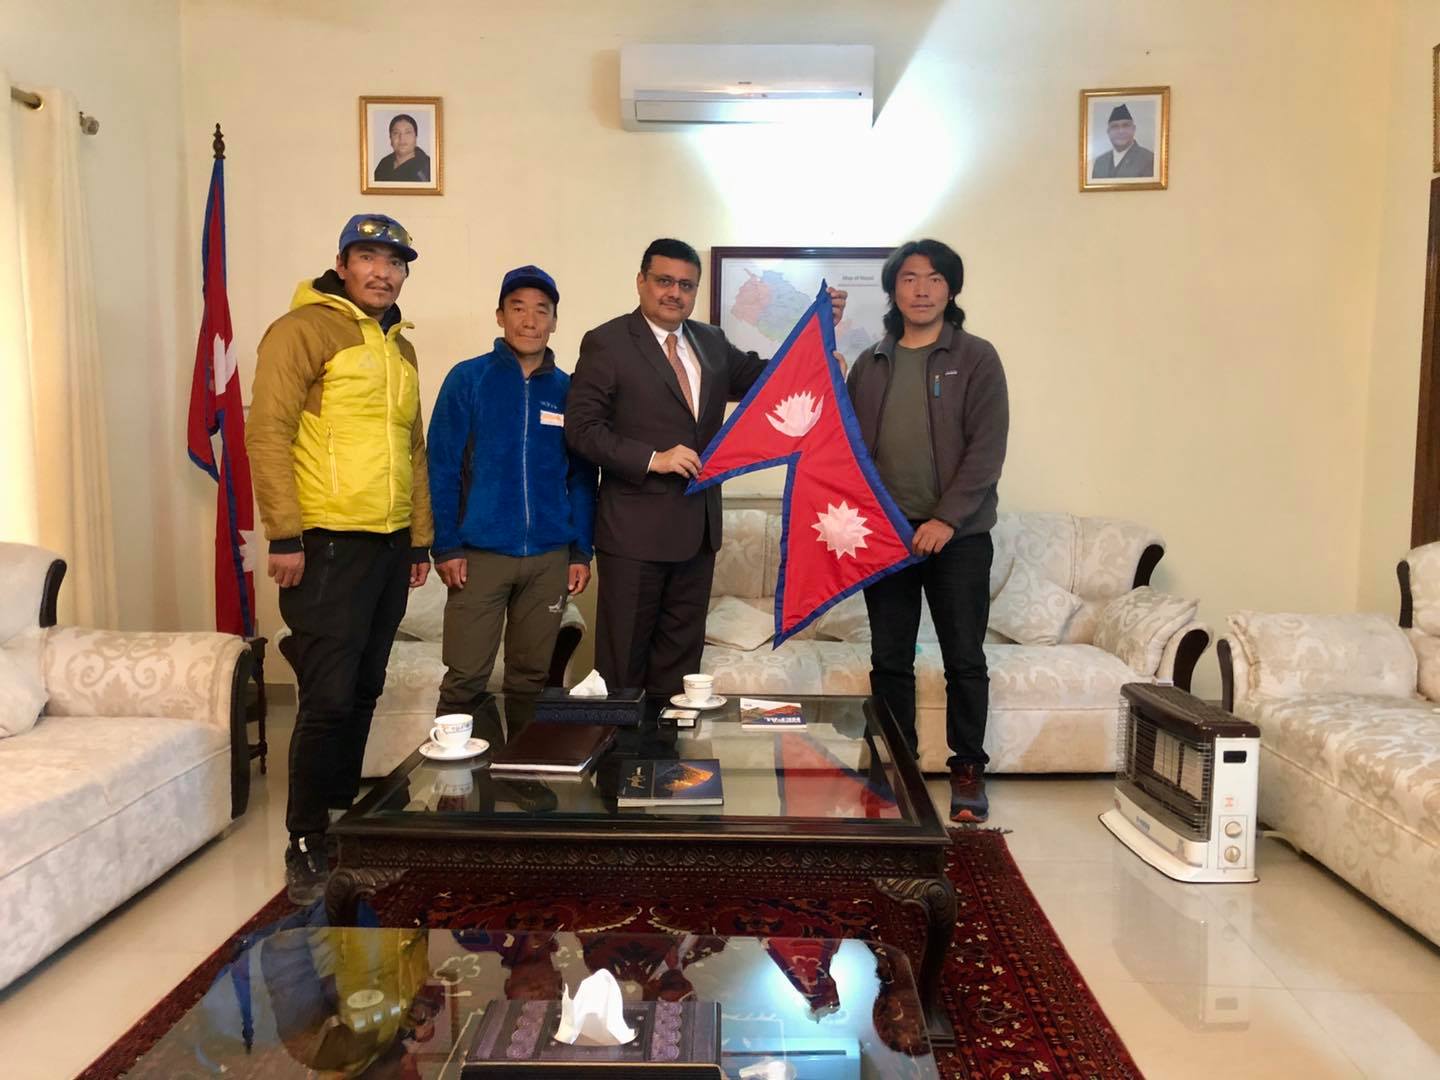 Мингма Галйе Шерпа (Mingma Gyalje Sherpa), Дава Тенцинг Шерпа (Dawa Tenzing Sherpa), Килу Пемба Шерпа (Kilu Pemba Sherpa) на приеме у посла Непала в Пакистане